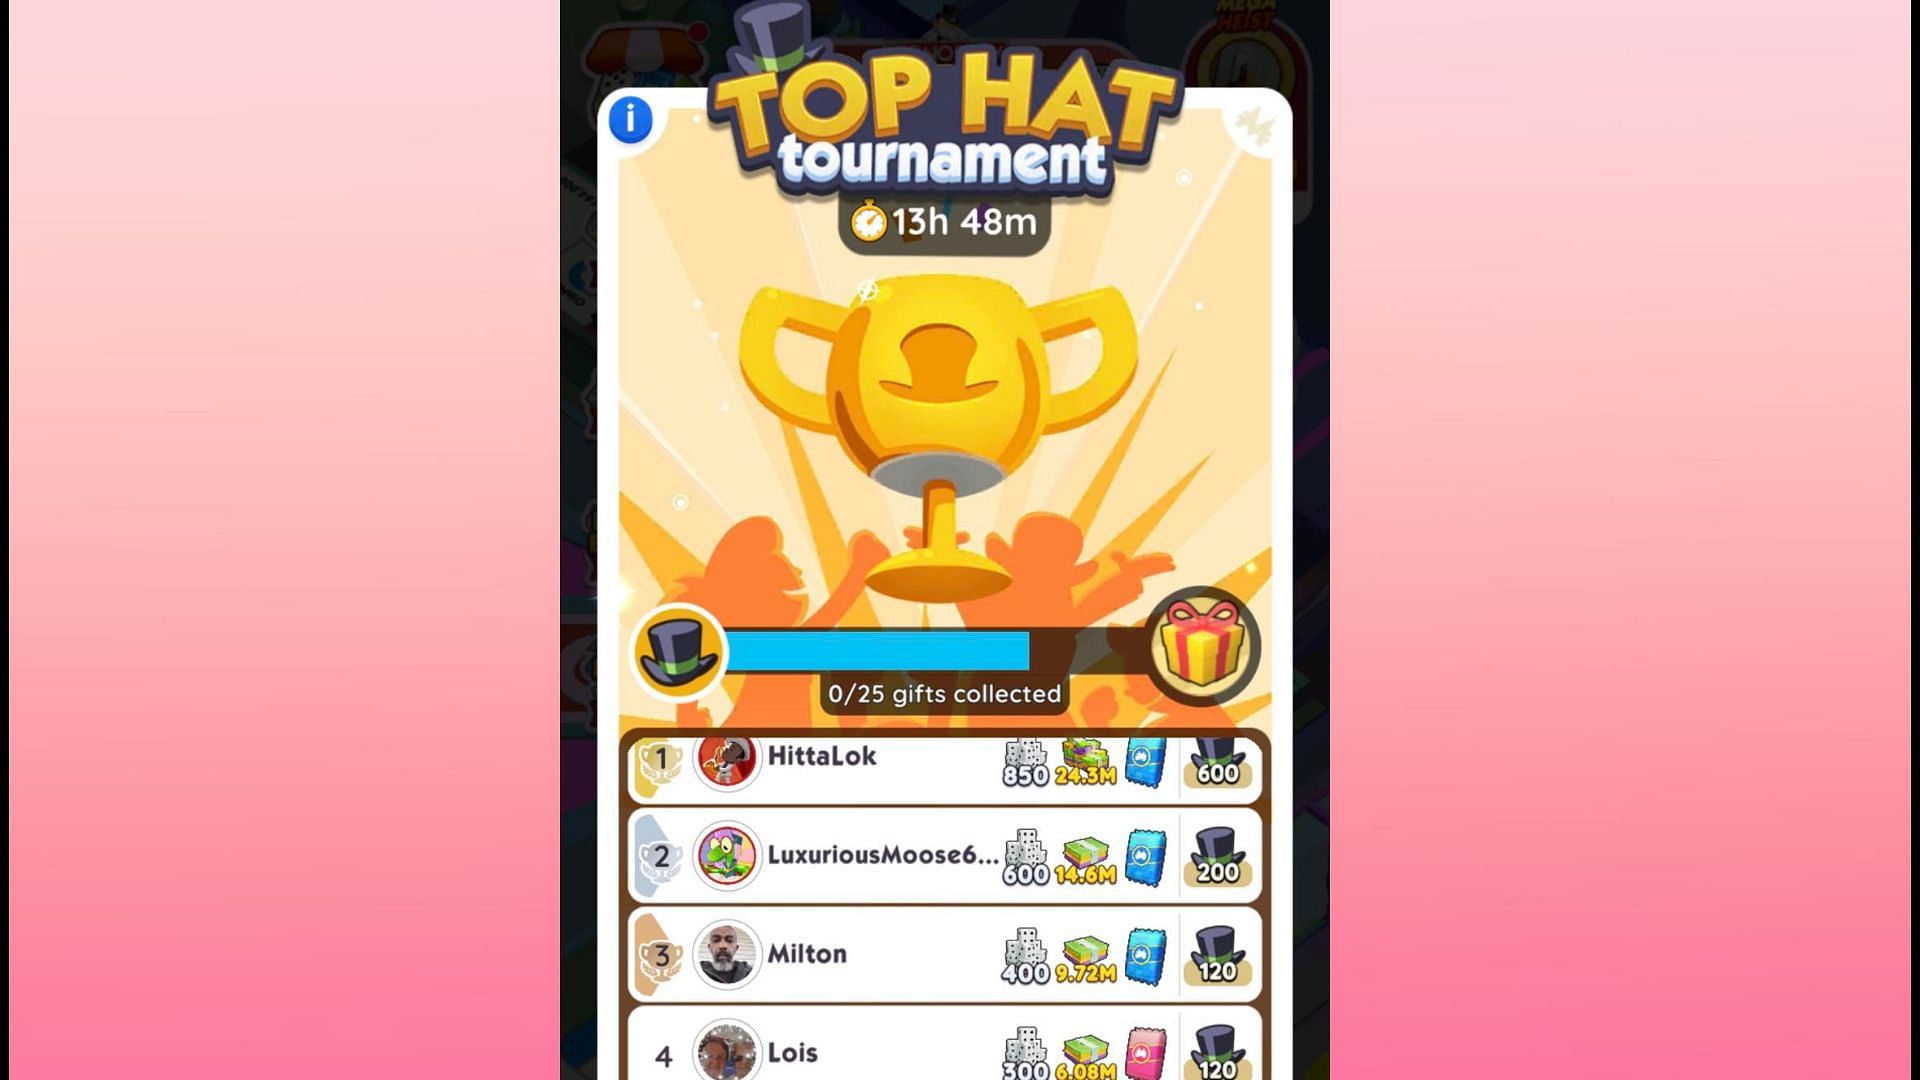 Monopoly Go Top Hat tournament offers rewards in plenty (Image via Scopely)